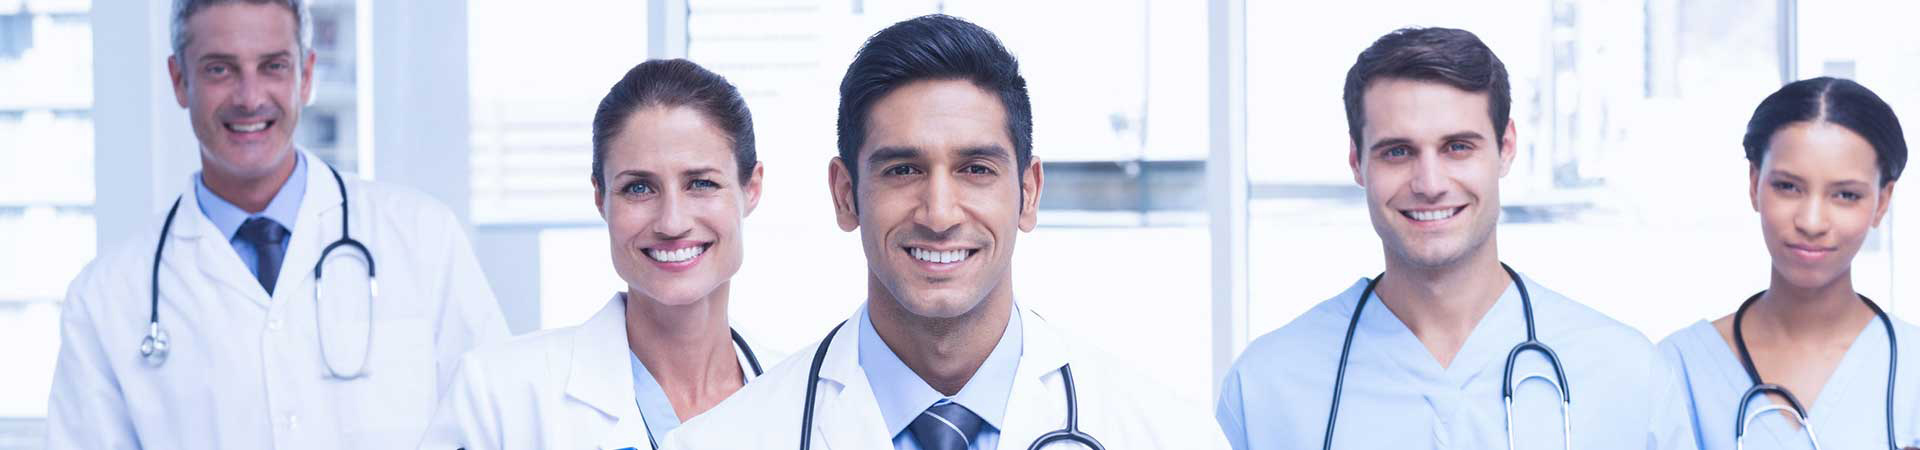 Doctors smiling